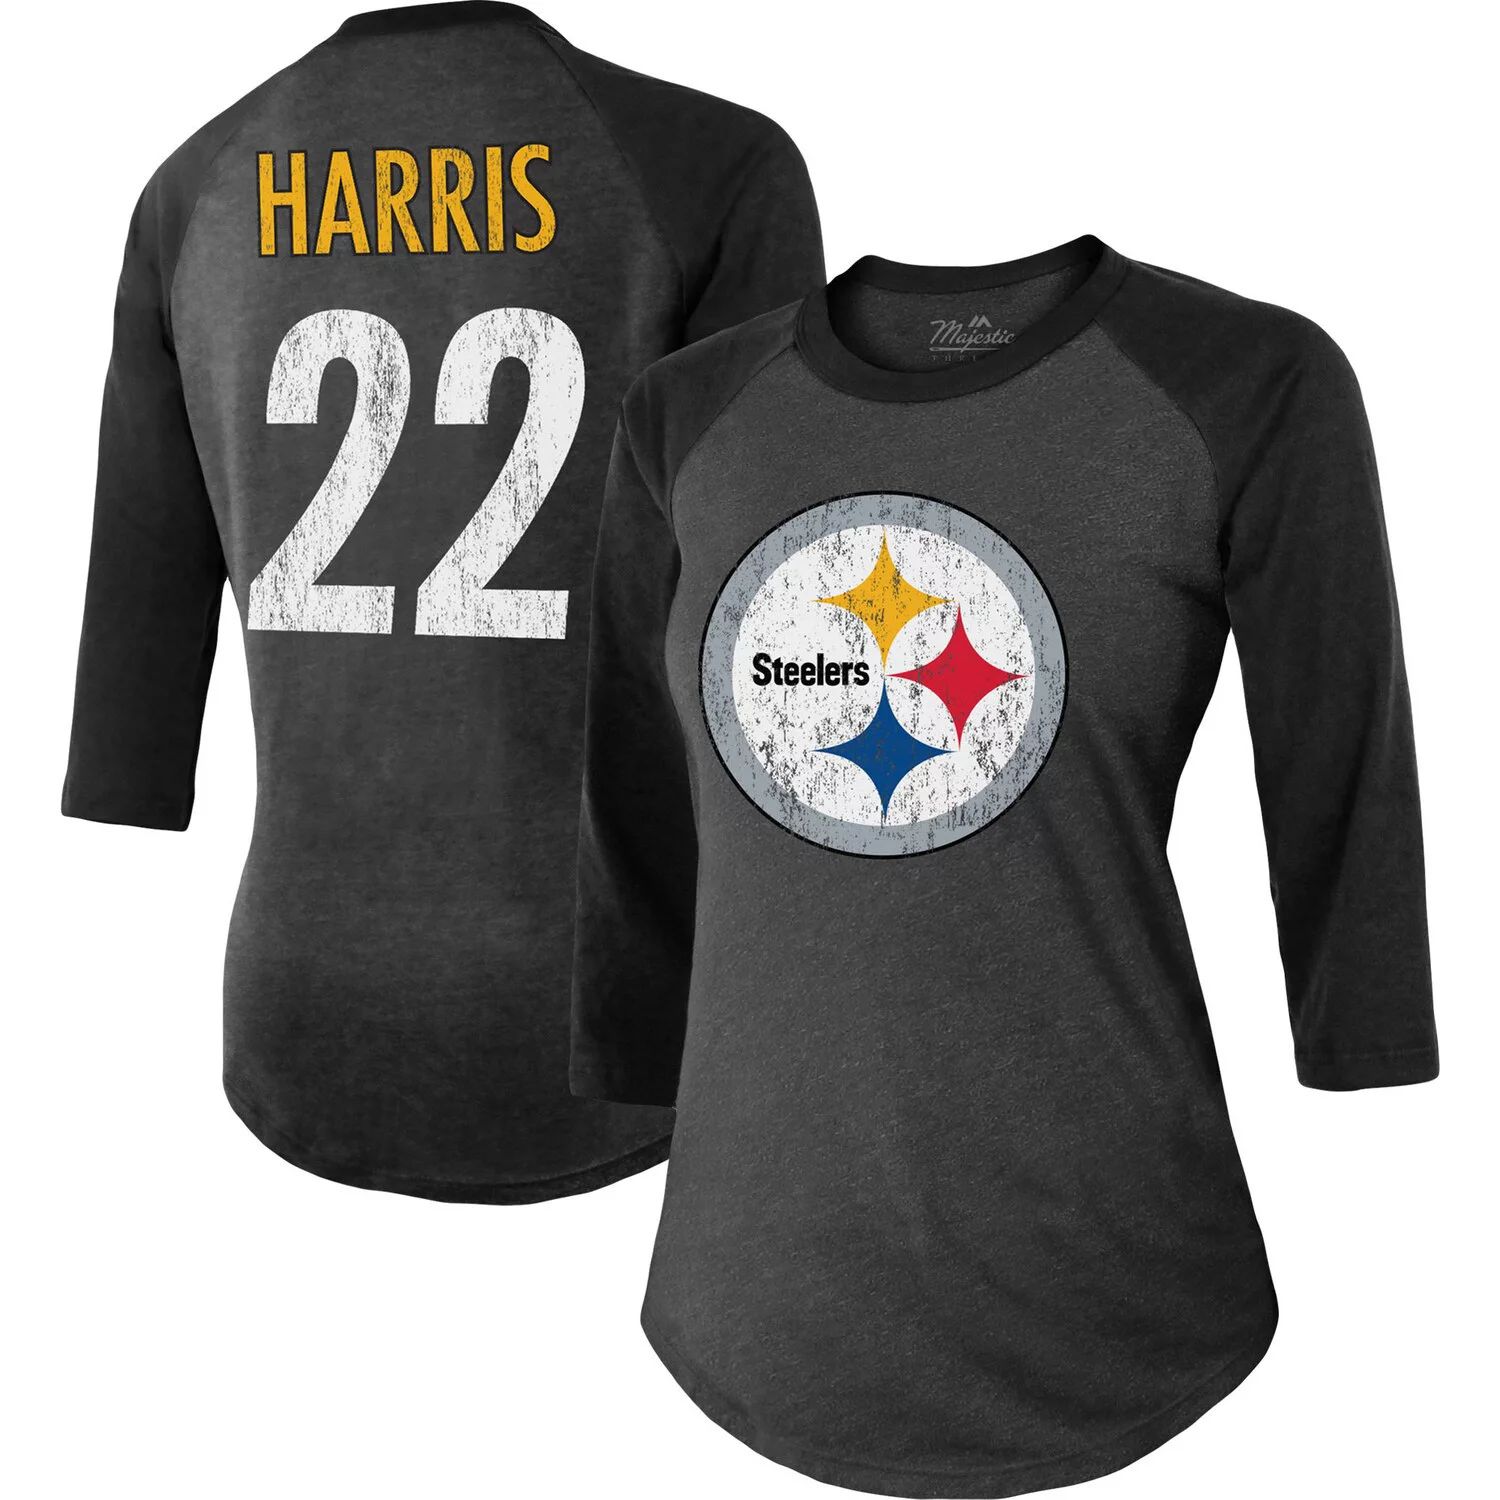 Женская футболка Majestic Threads Najee Harris Black Pittsburgh Steelers с именем и номером игрока реглан Tri-Blend с рукавами 3/4 Majestic